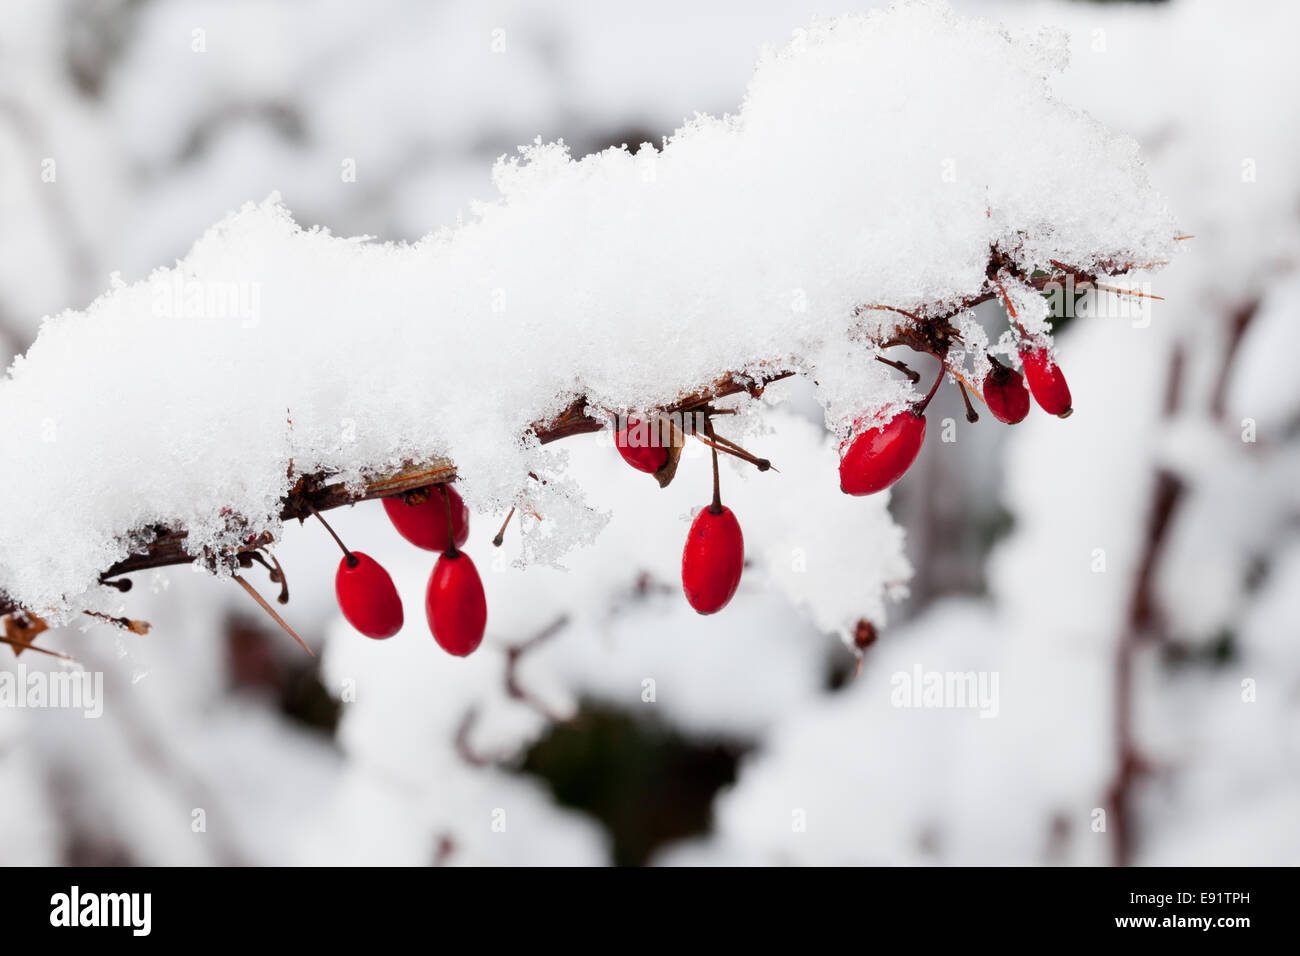 Snow falling on berberis berries Stock Photo